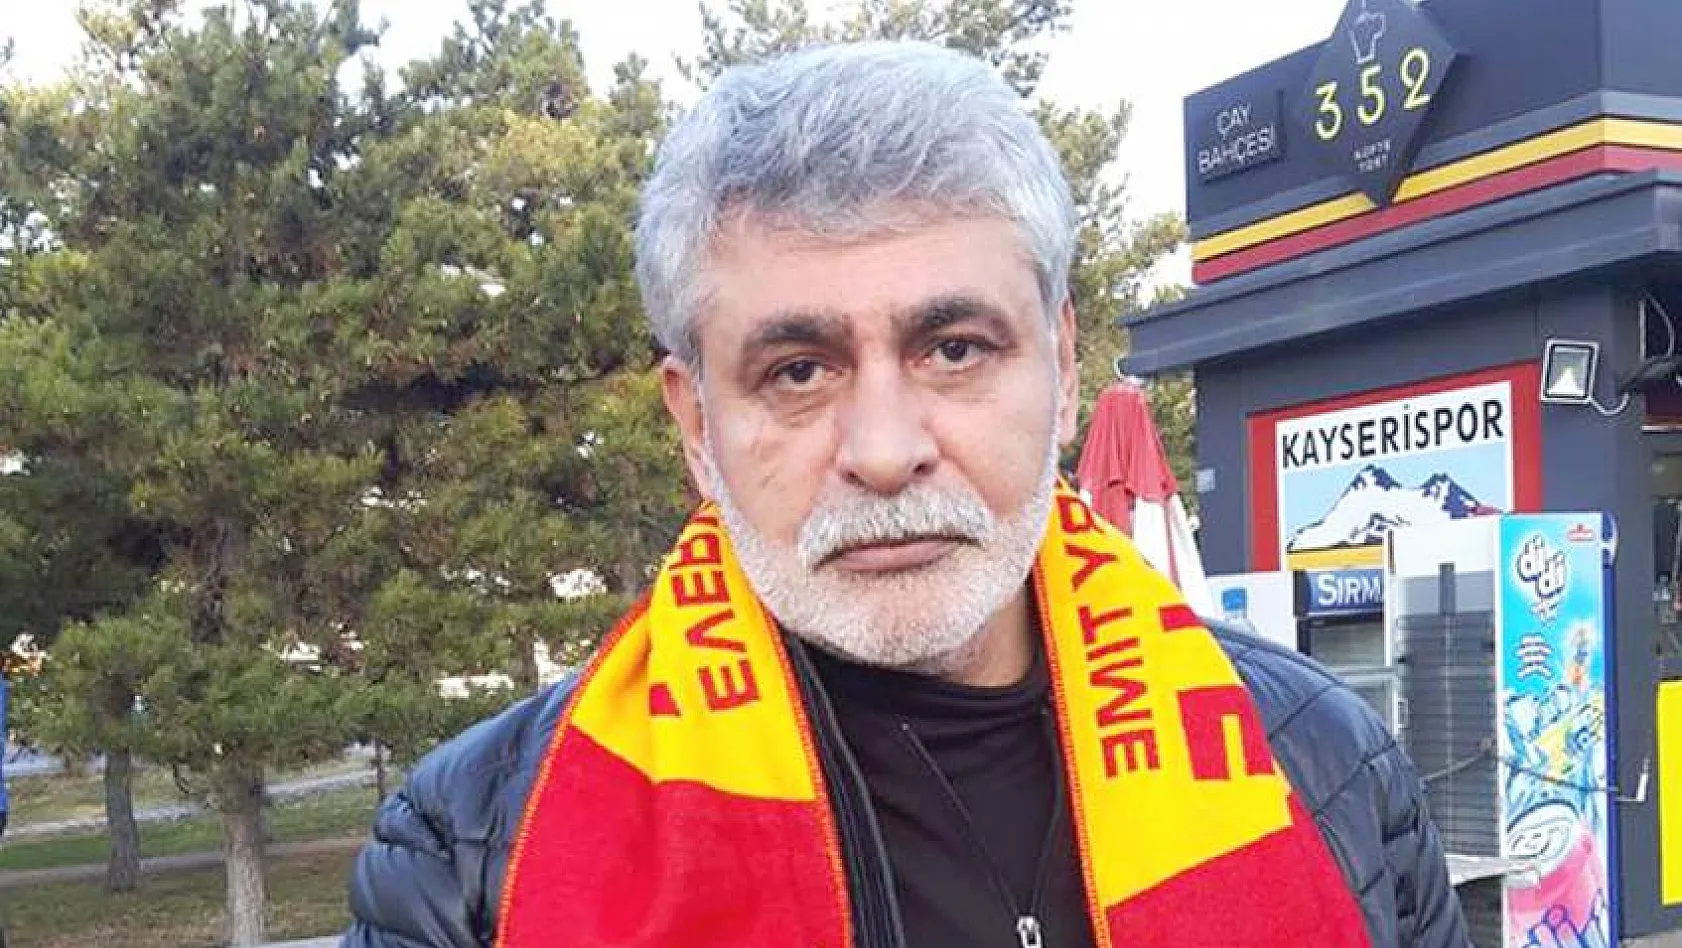 Kayserispor eski futbolcusu Levent Kurt, isyan etti